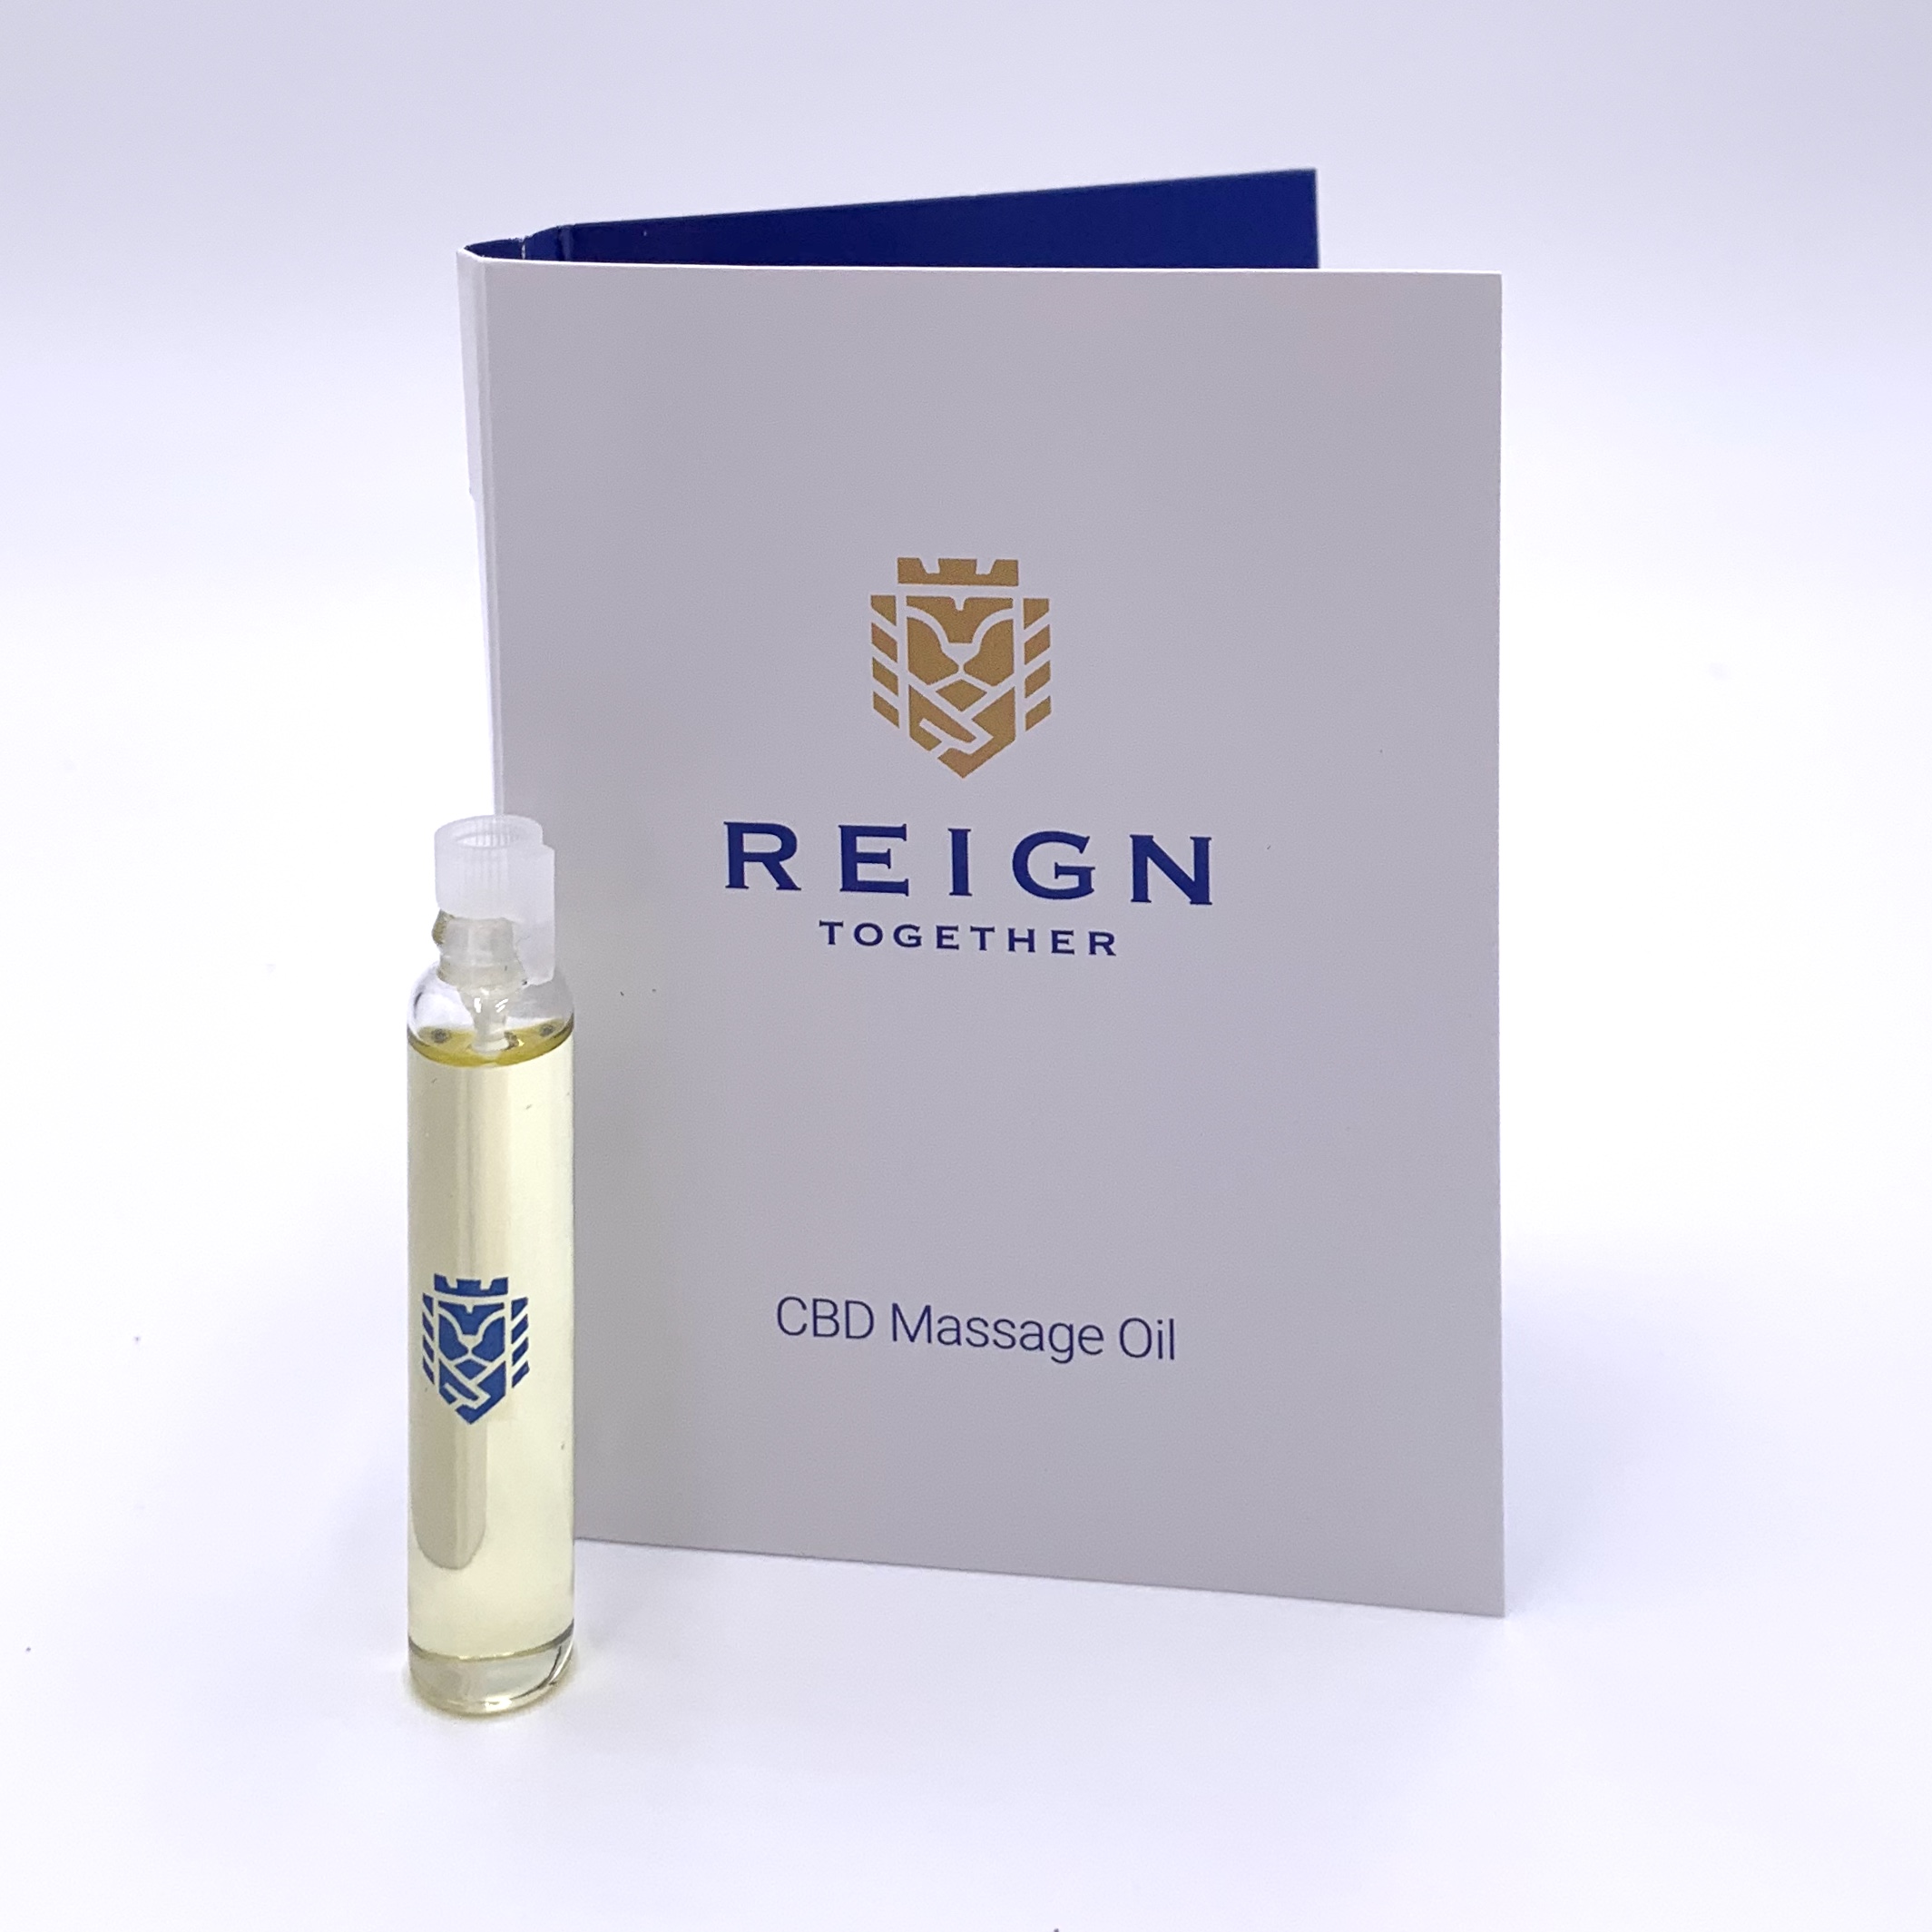 Reign Together CBD Massage Oil for Birchbox August 2020